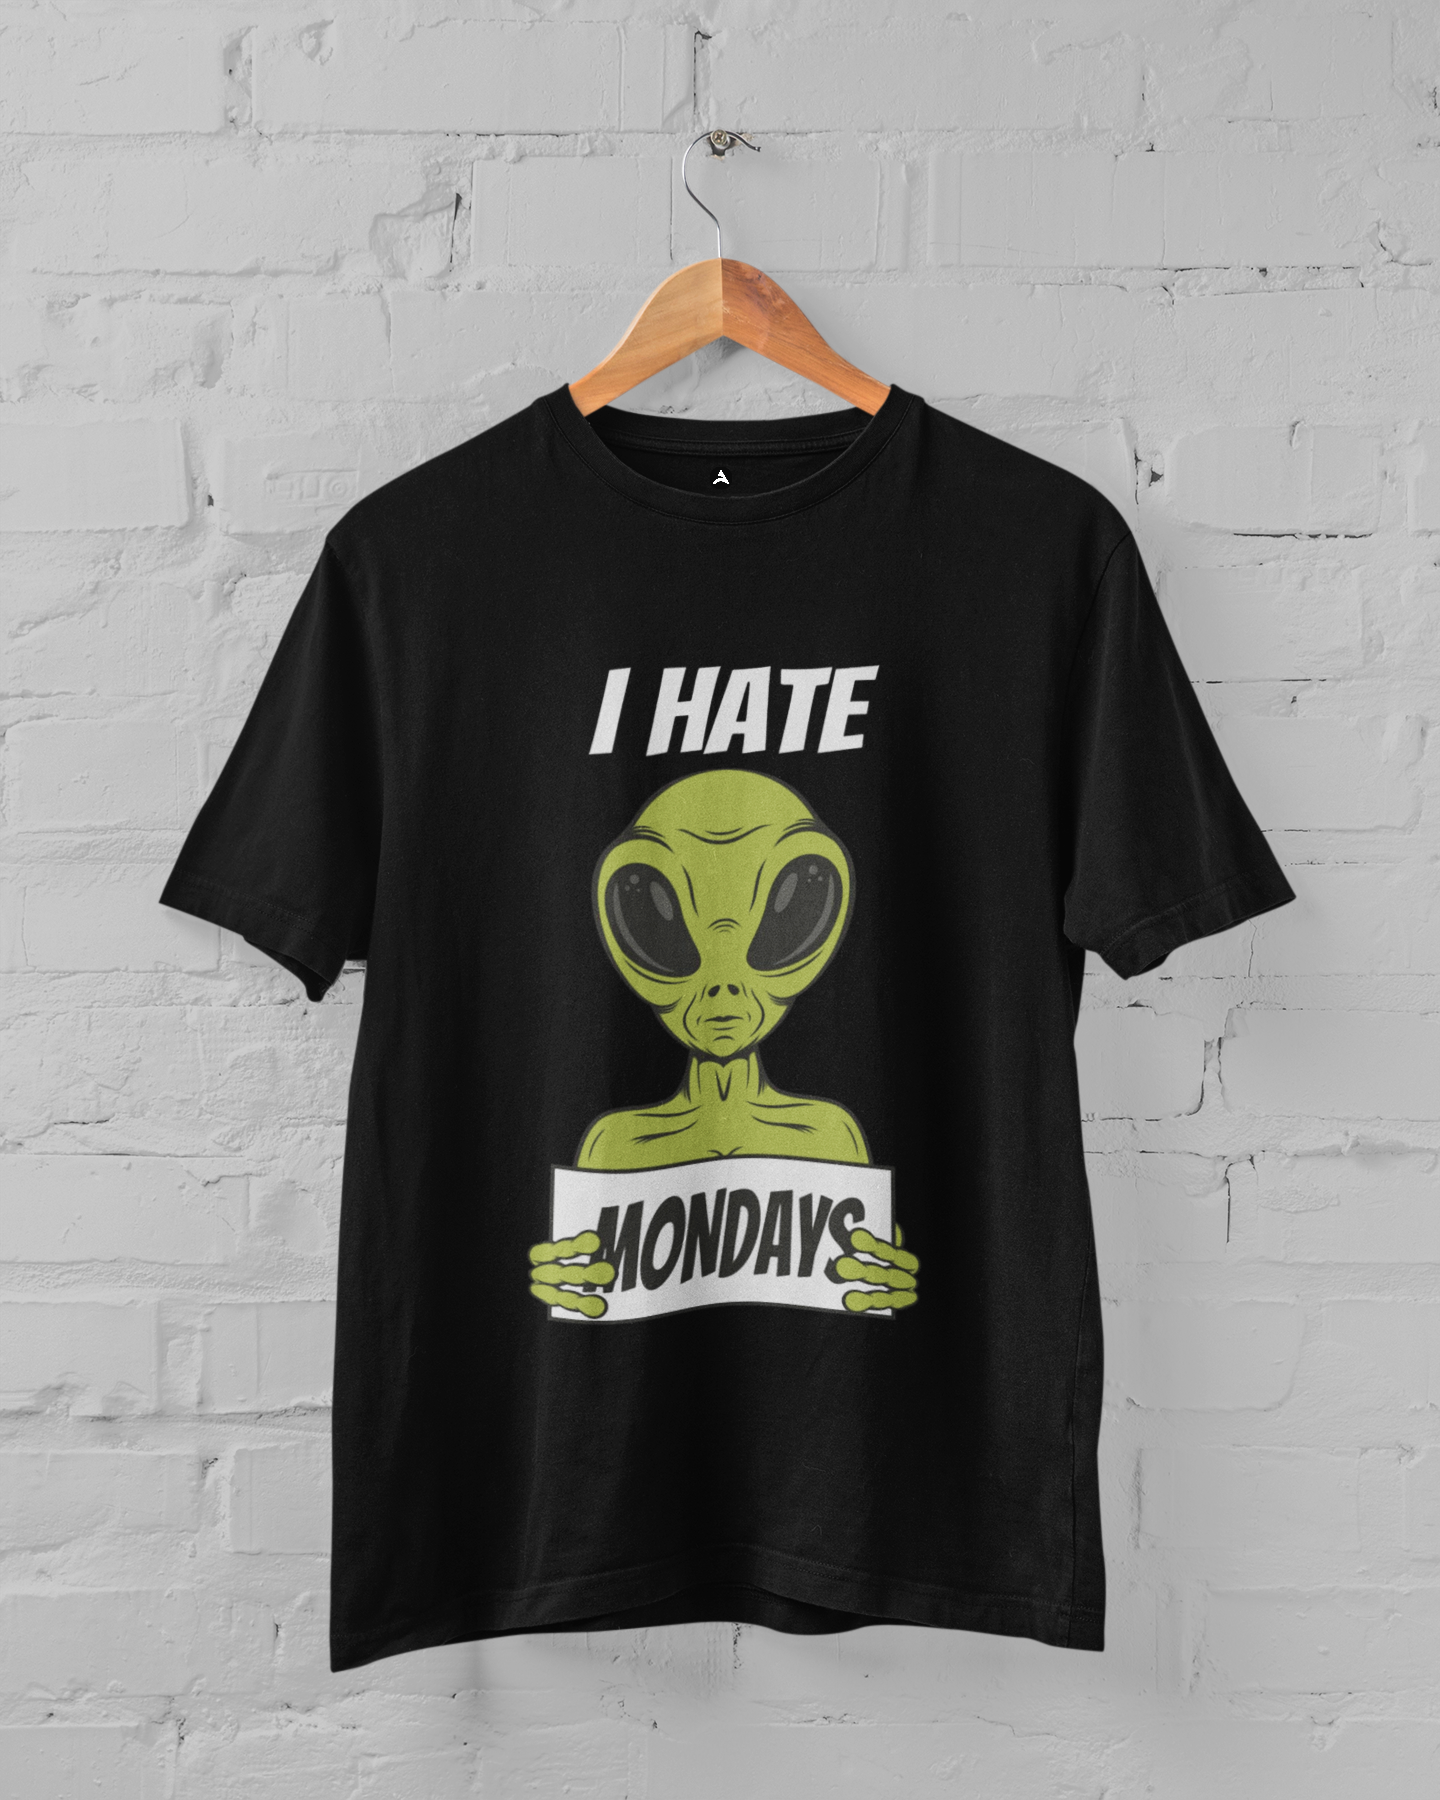 I HATE MONDAYS : ALIEN & SPACE- HALF-SLEEVE T-SHIRTS